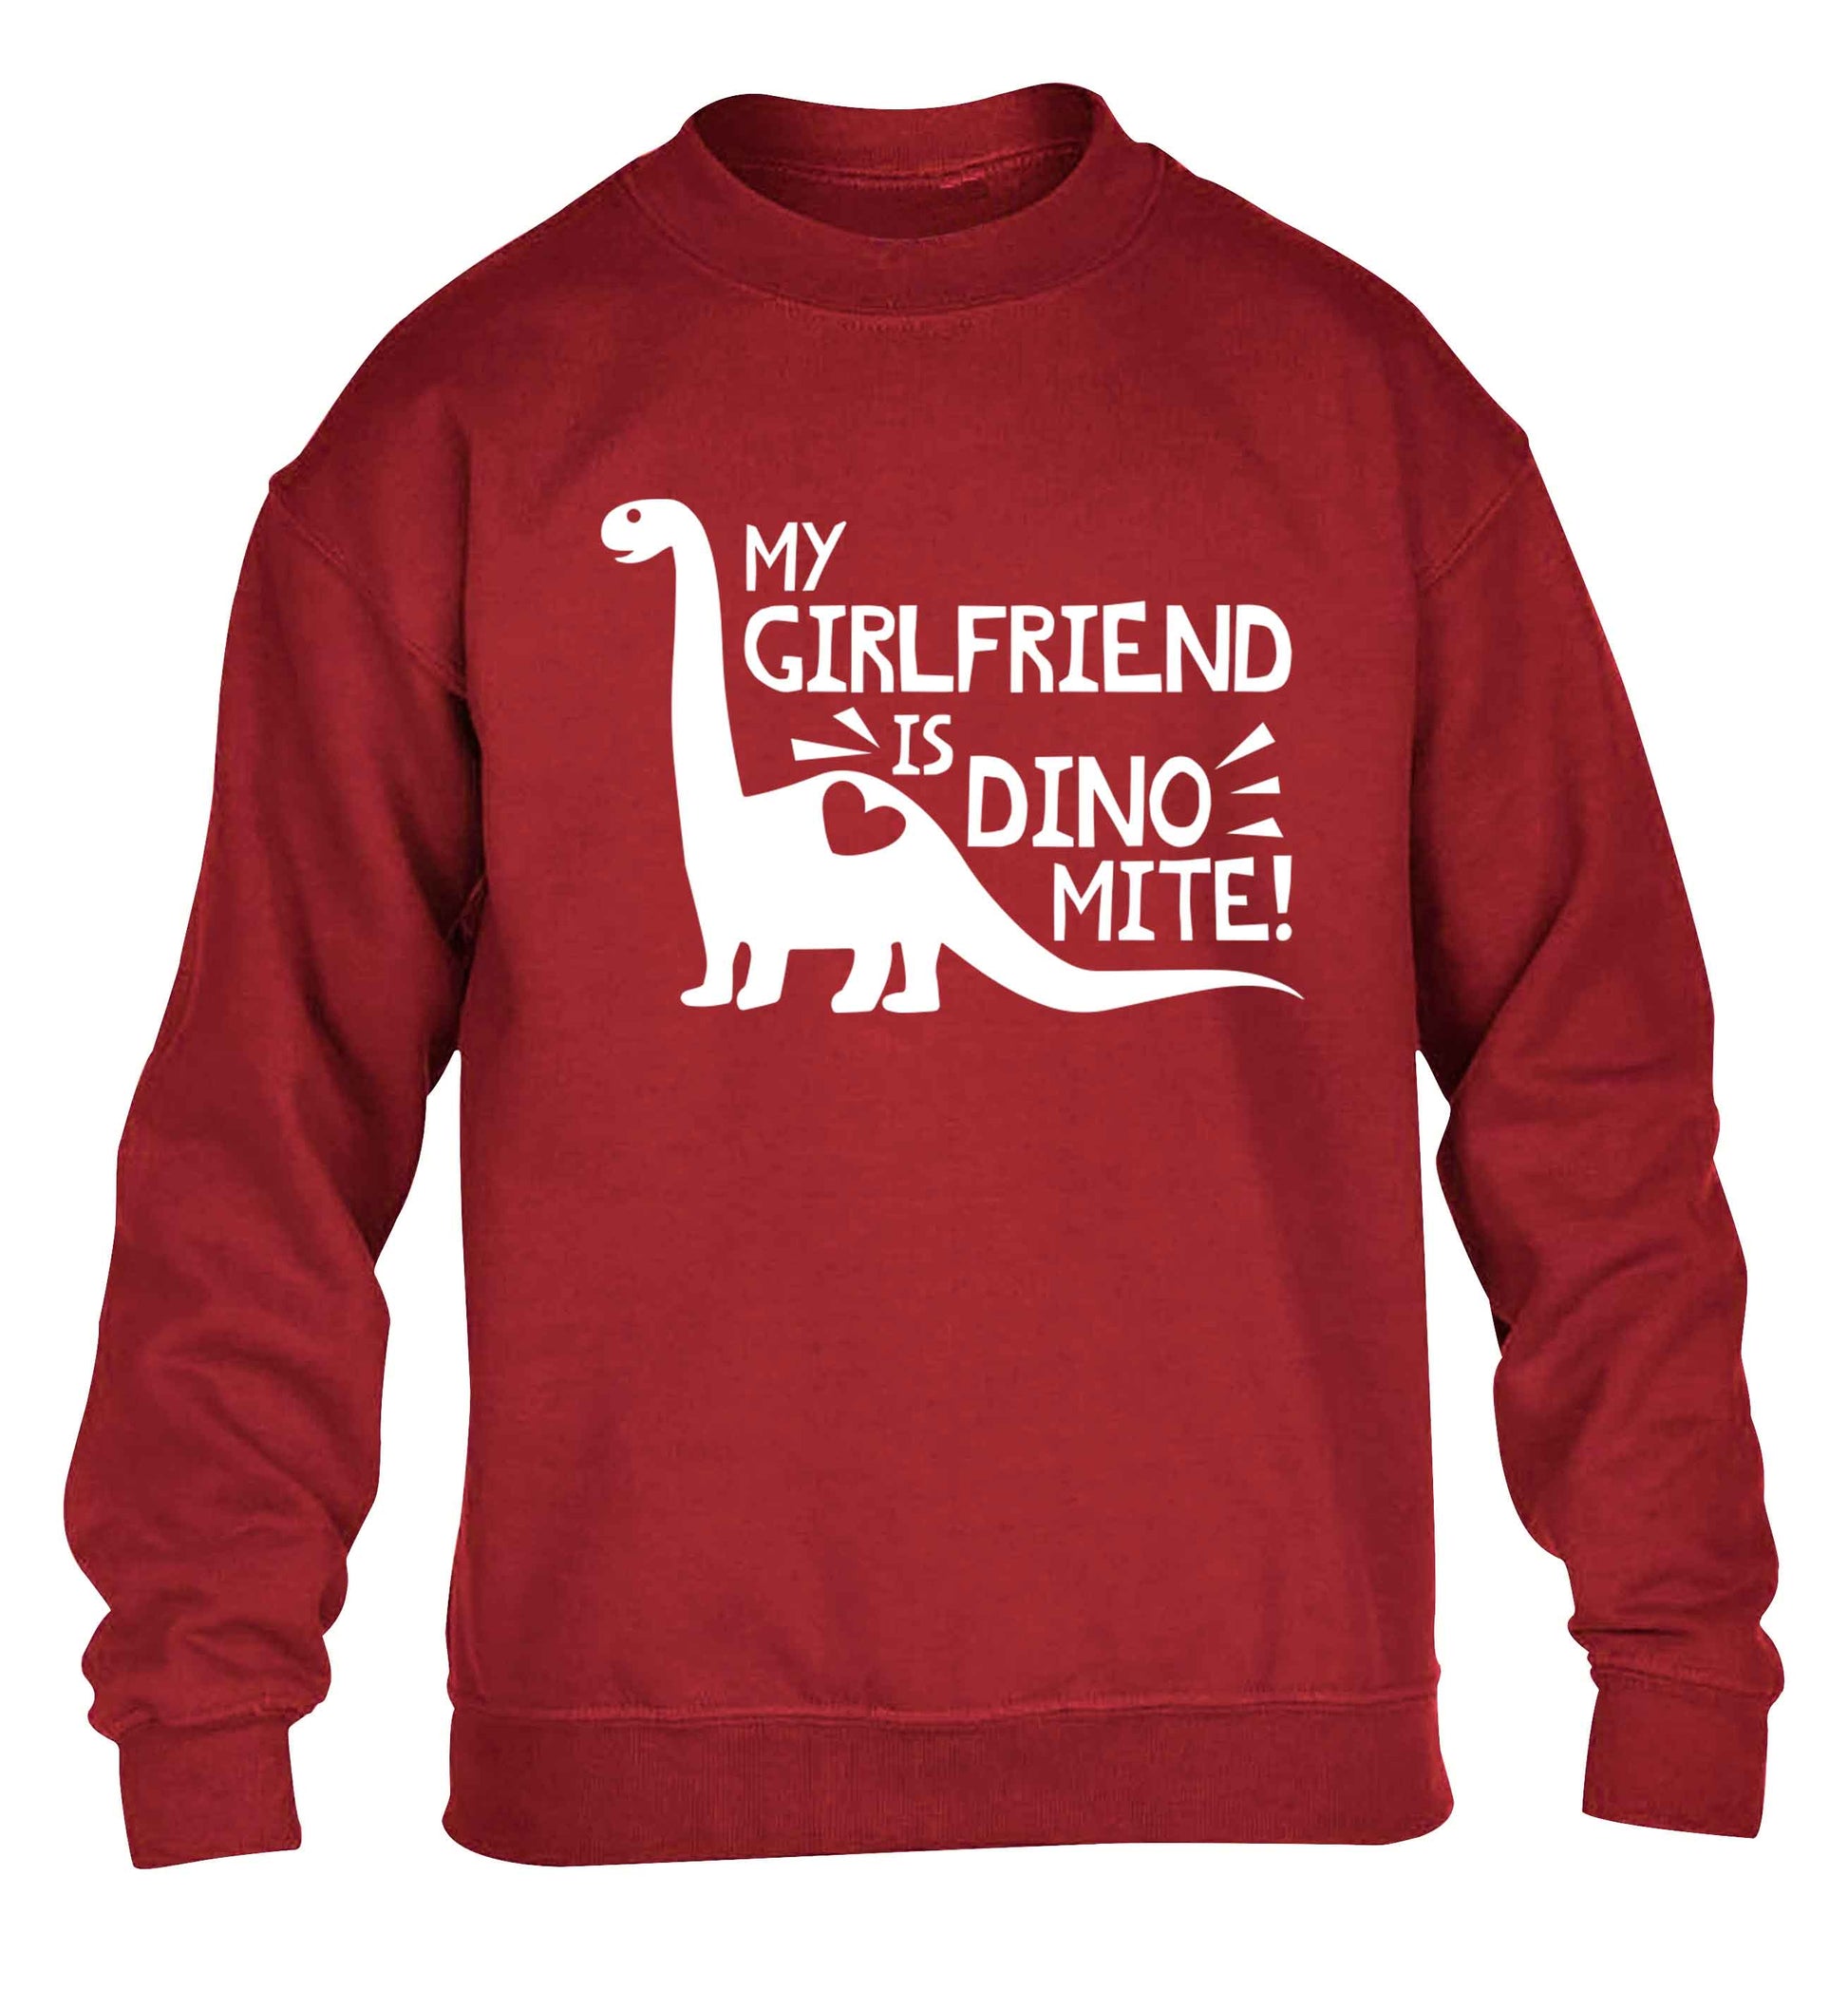 My girlfriend is dinomite! children's grey sweater 12-13 Years